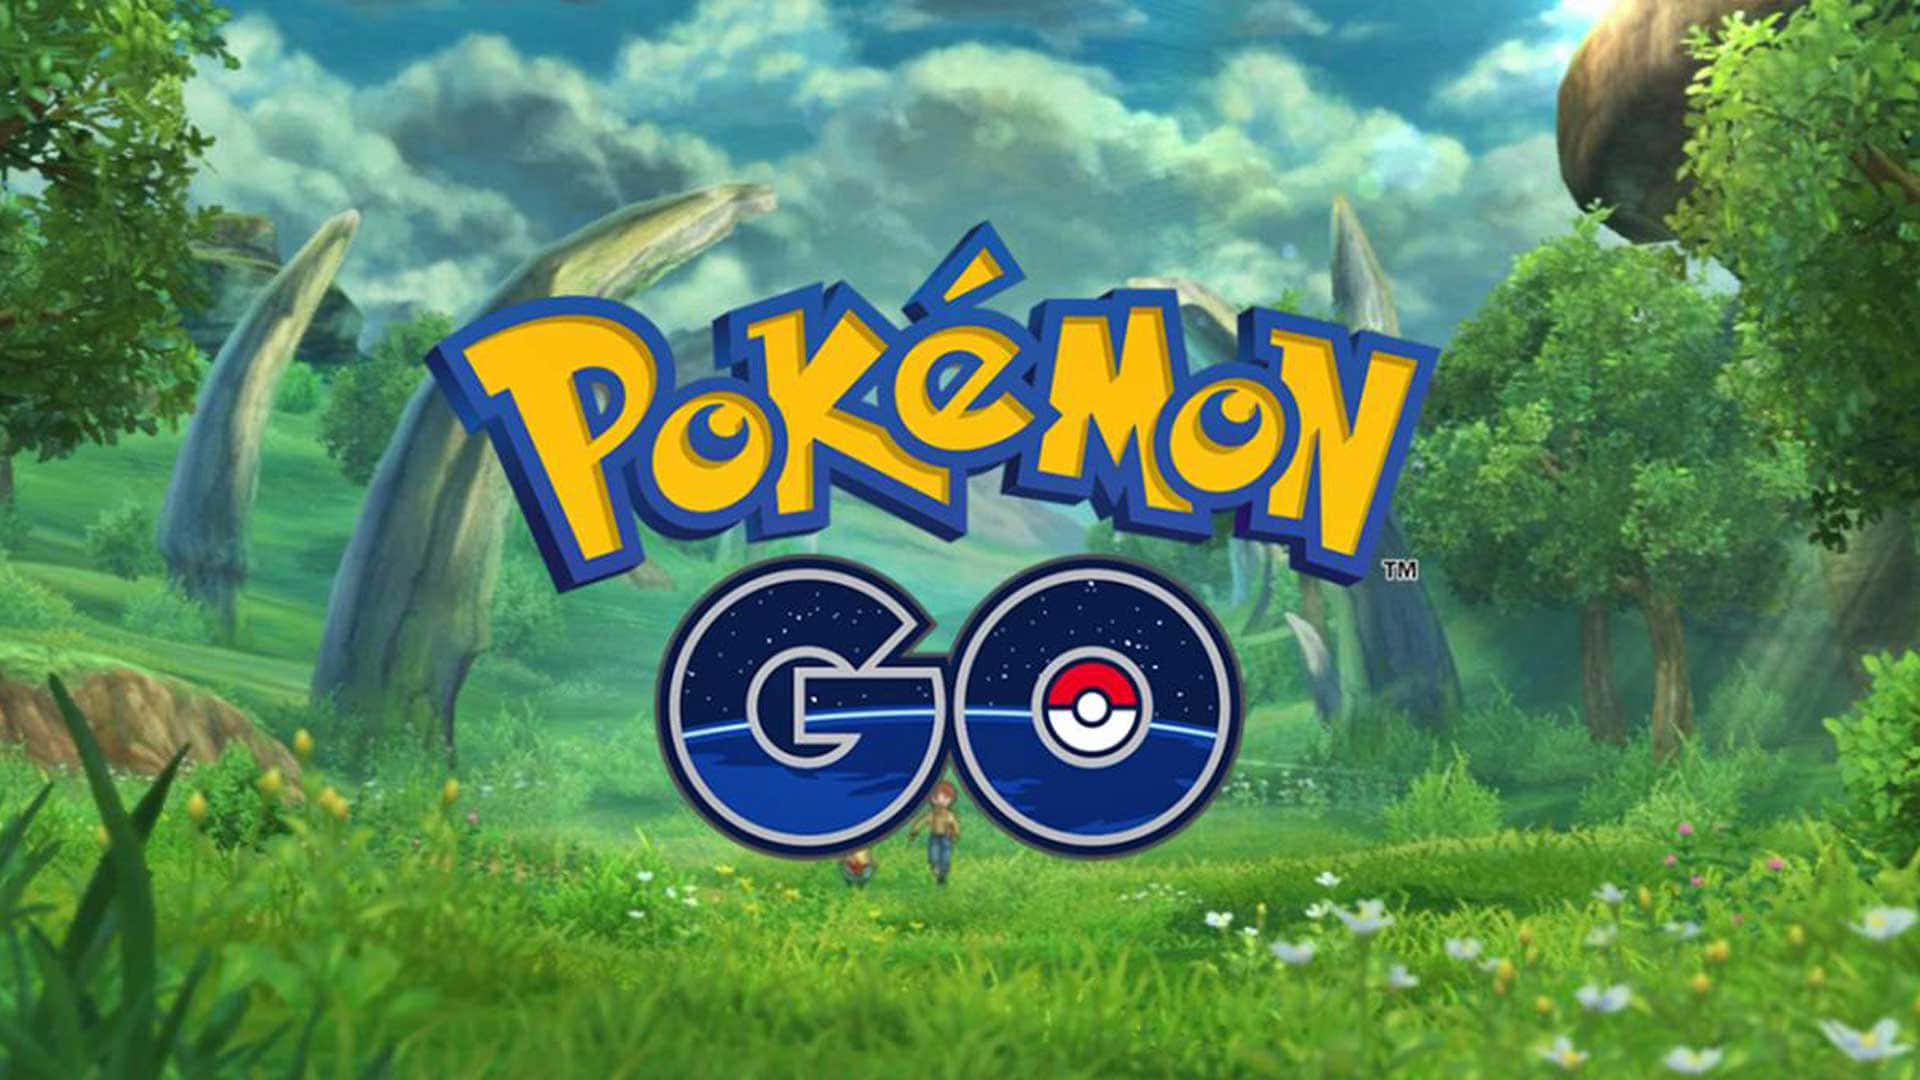 Pokemon Go Poster